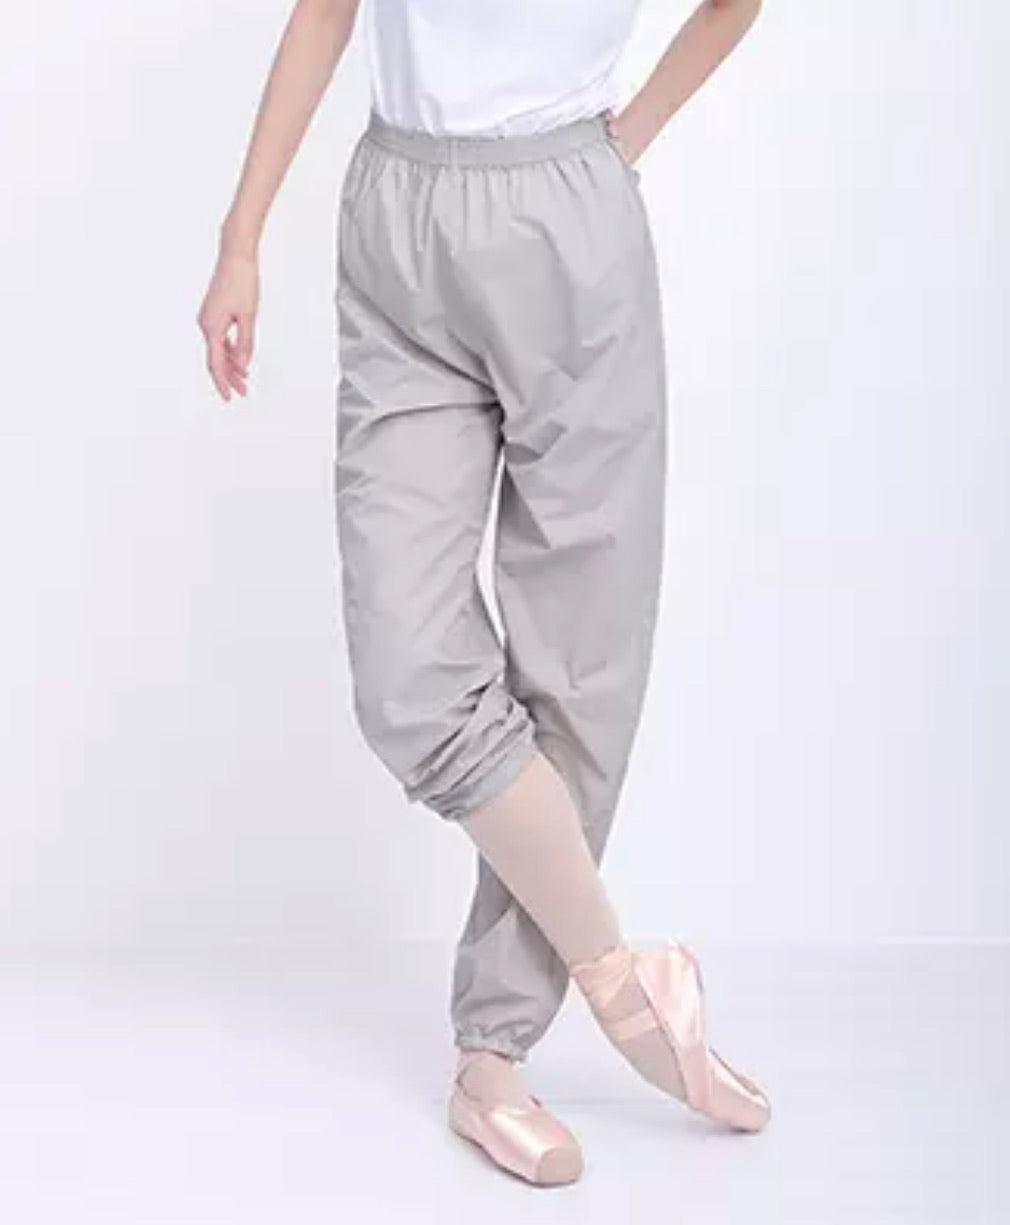 Grey trash pants / sauna pants / warmup pants for dancers from The Collective Dancewear